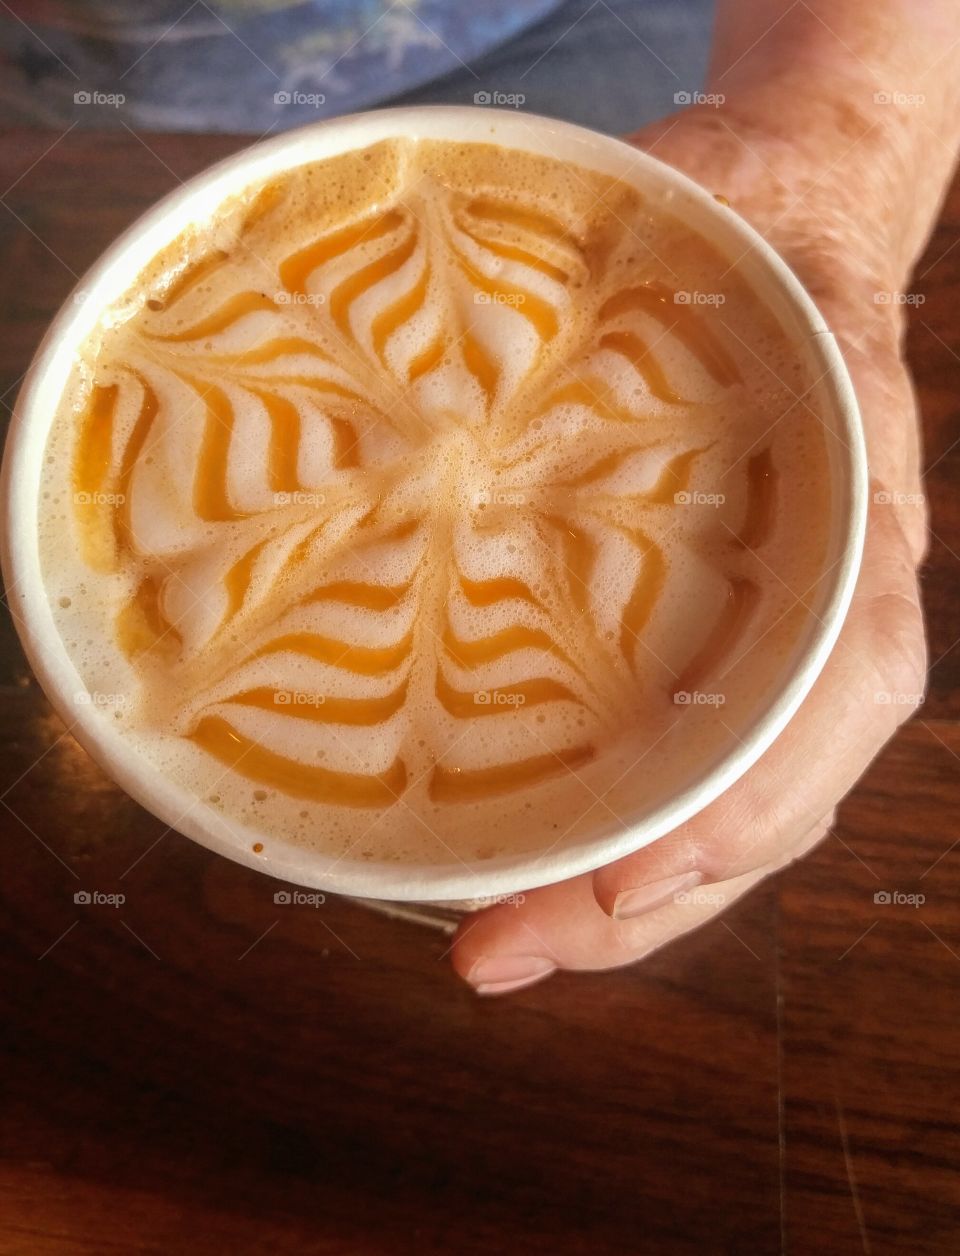 Double carmel latte lotus